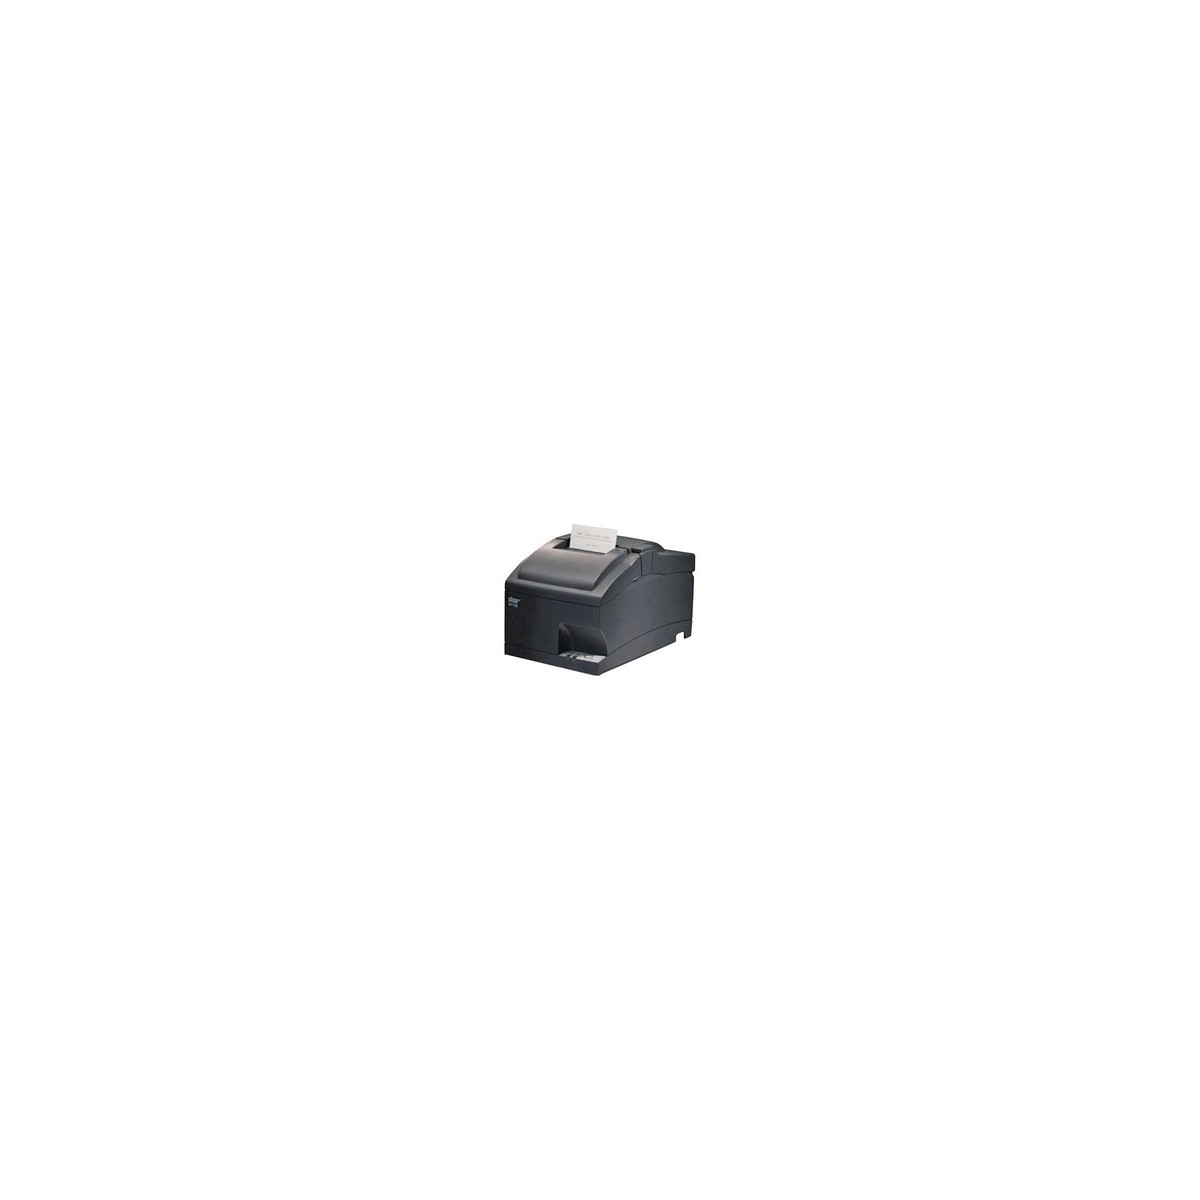 Star Micronics SP700 - Dot matrix - POS printer - 8.9 lps - 76 mm - 6.3 cm - Wired